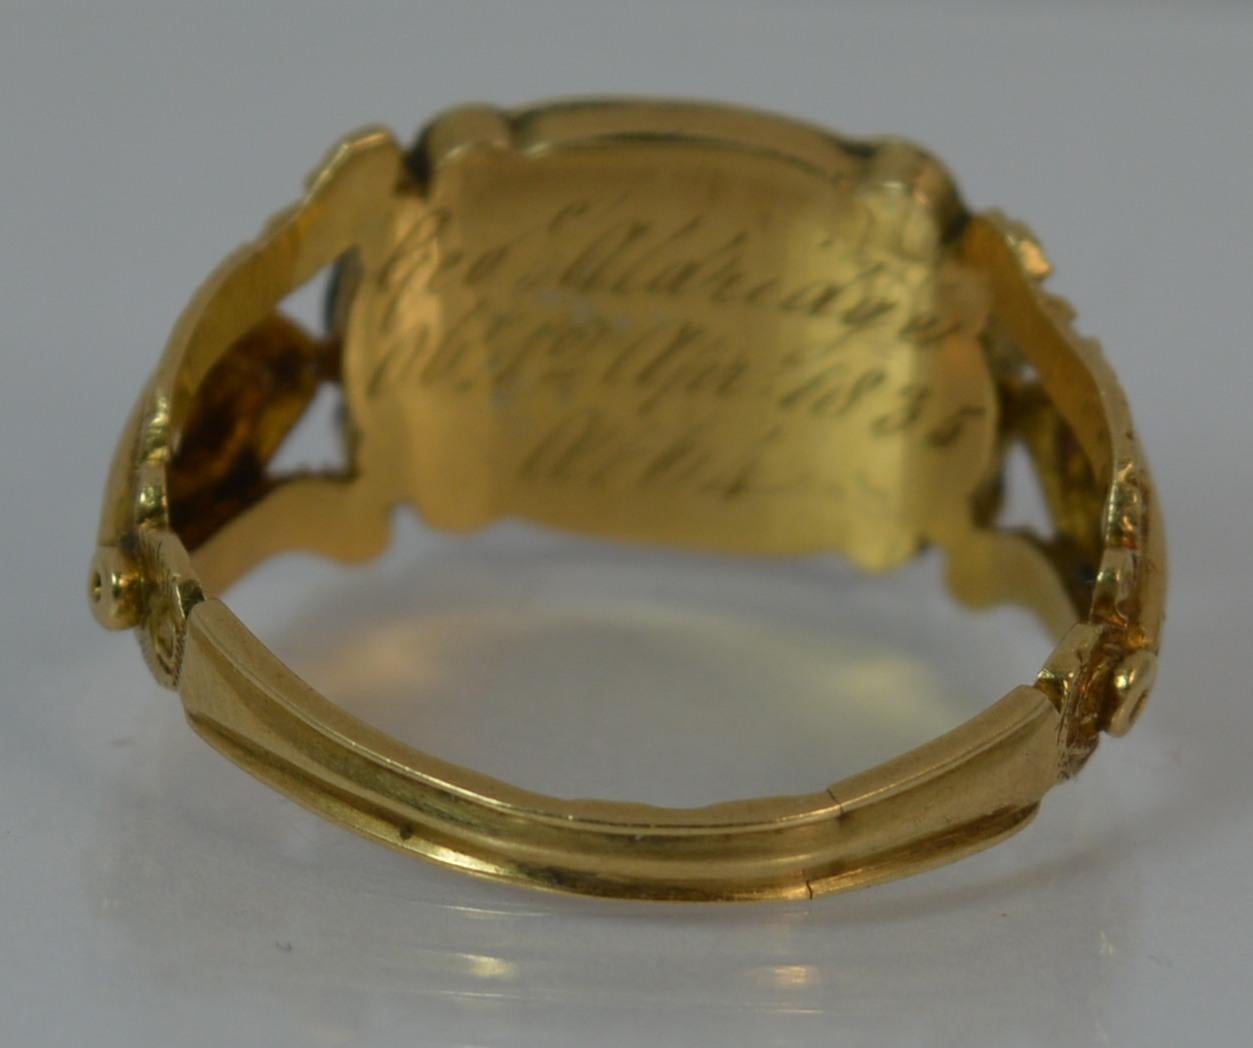 1834 William IV 18 Carat Gold and Enamel Mourning Ring 2